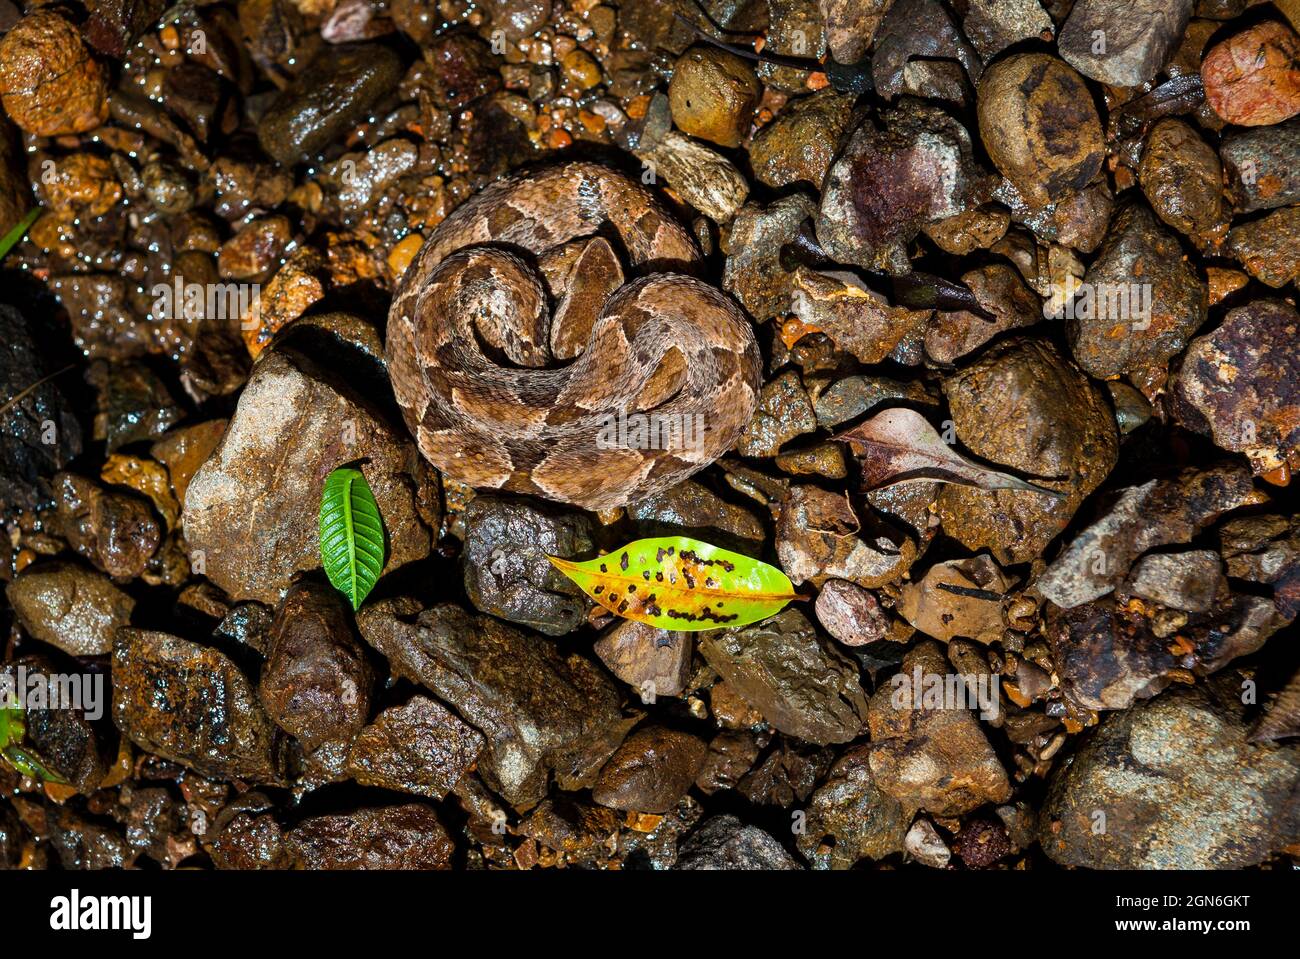 Panama wildlife with a venomous Fer-de-lance snake, Bothrops asper, in Chagres National Park, Republic of Panama, Central America Stock Photo